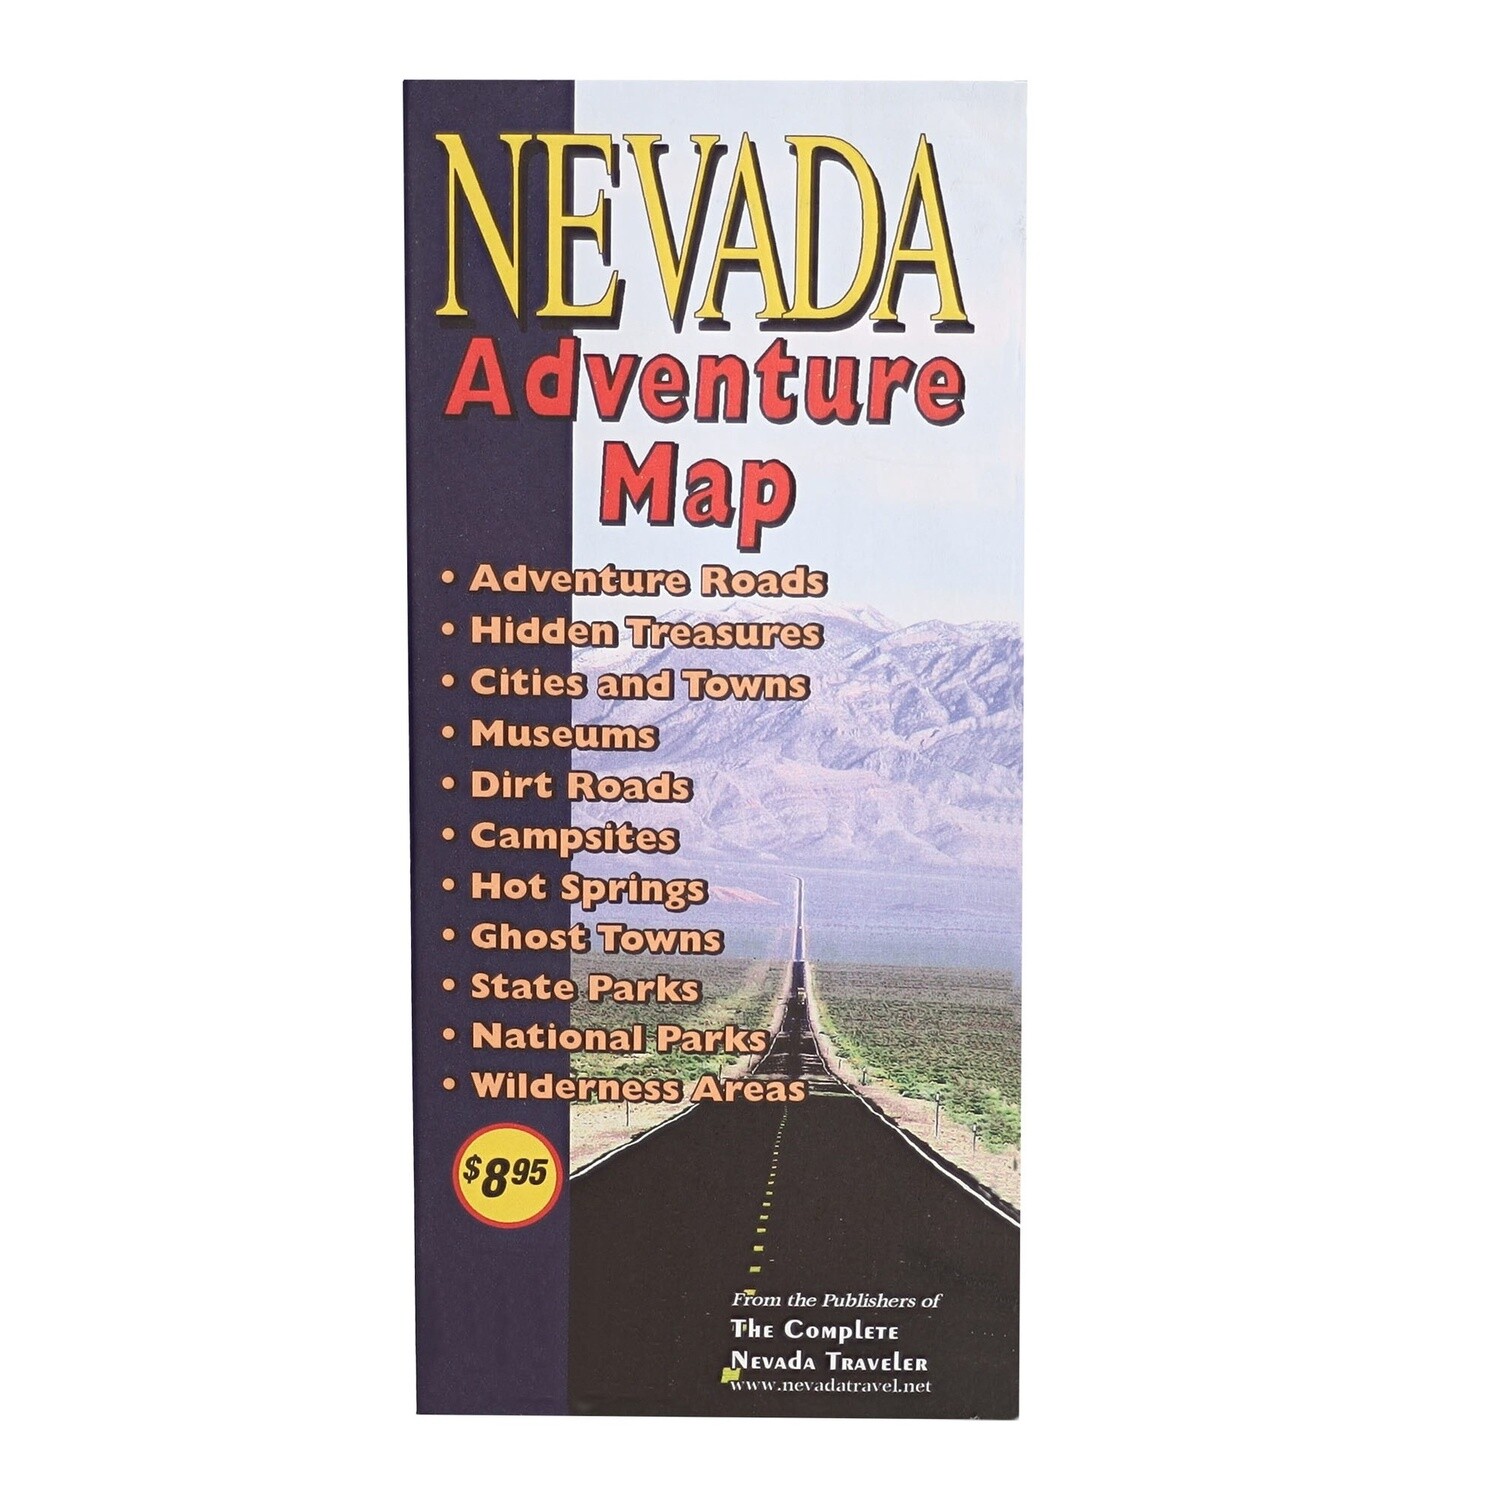 Nevada Adventure Map